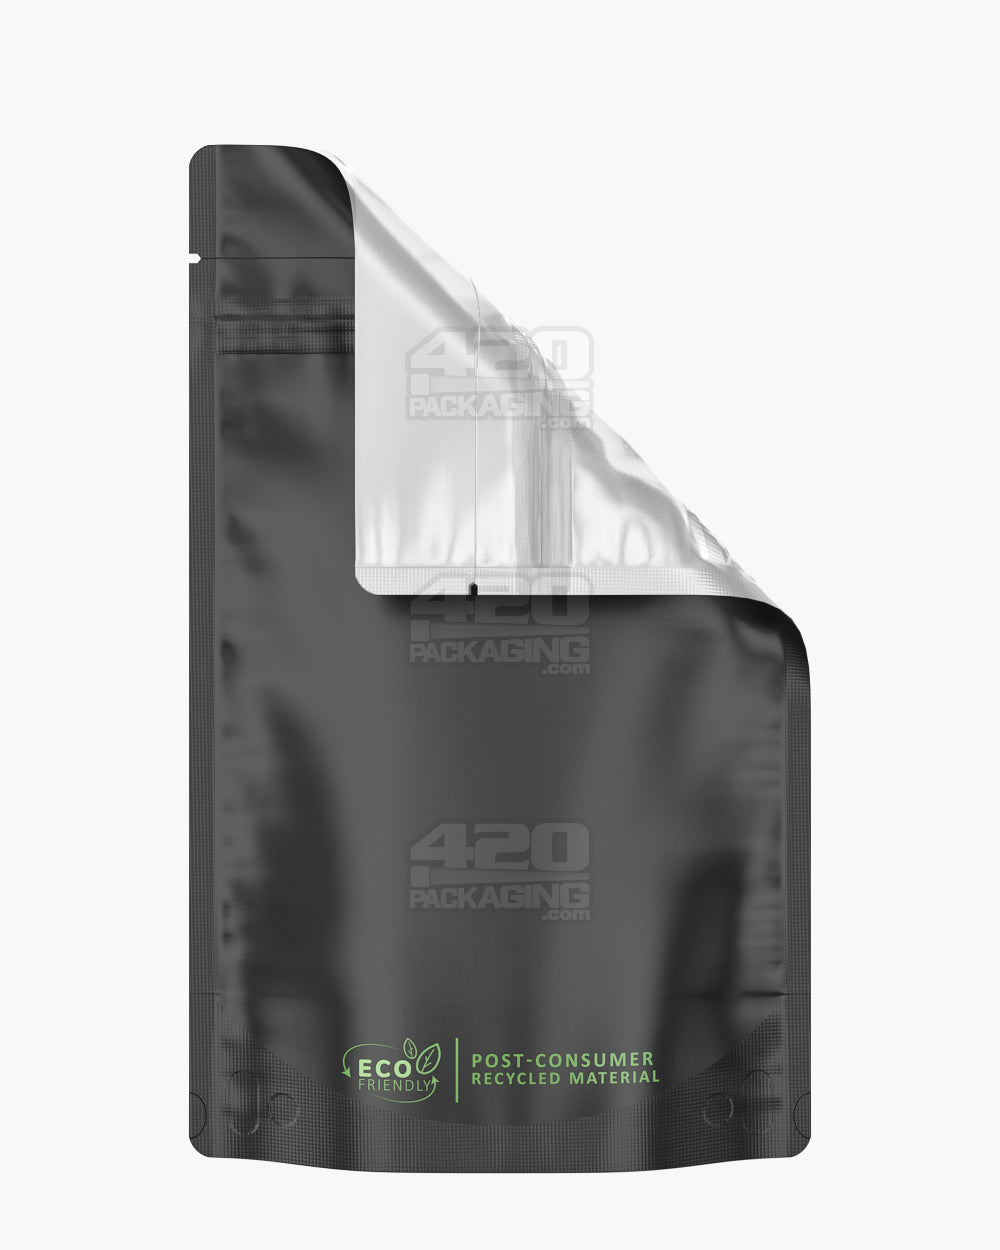 Matte-Black 5" x 8.1" PCR Vista Mylar Tamper Evident Bags (14 grams) 1000/Box - 1